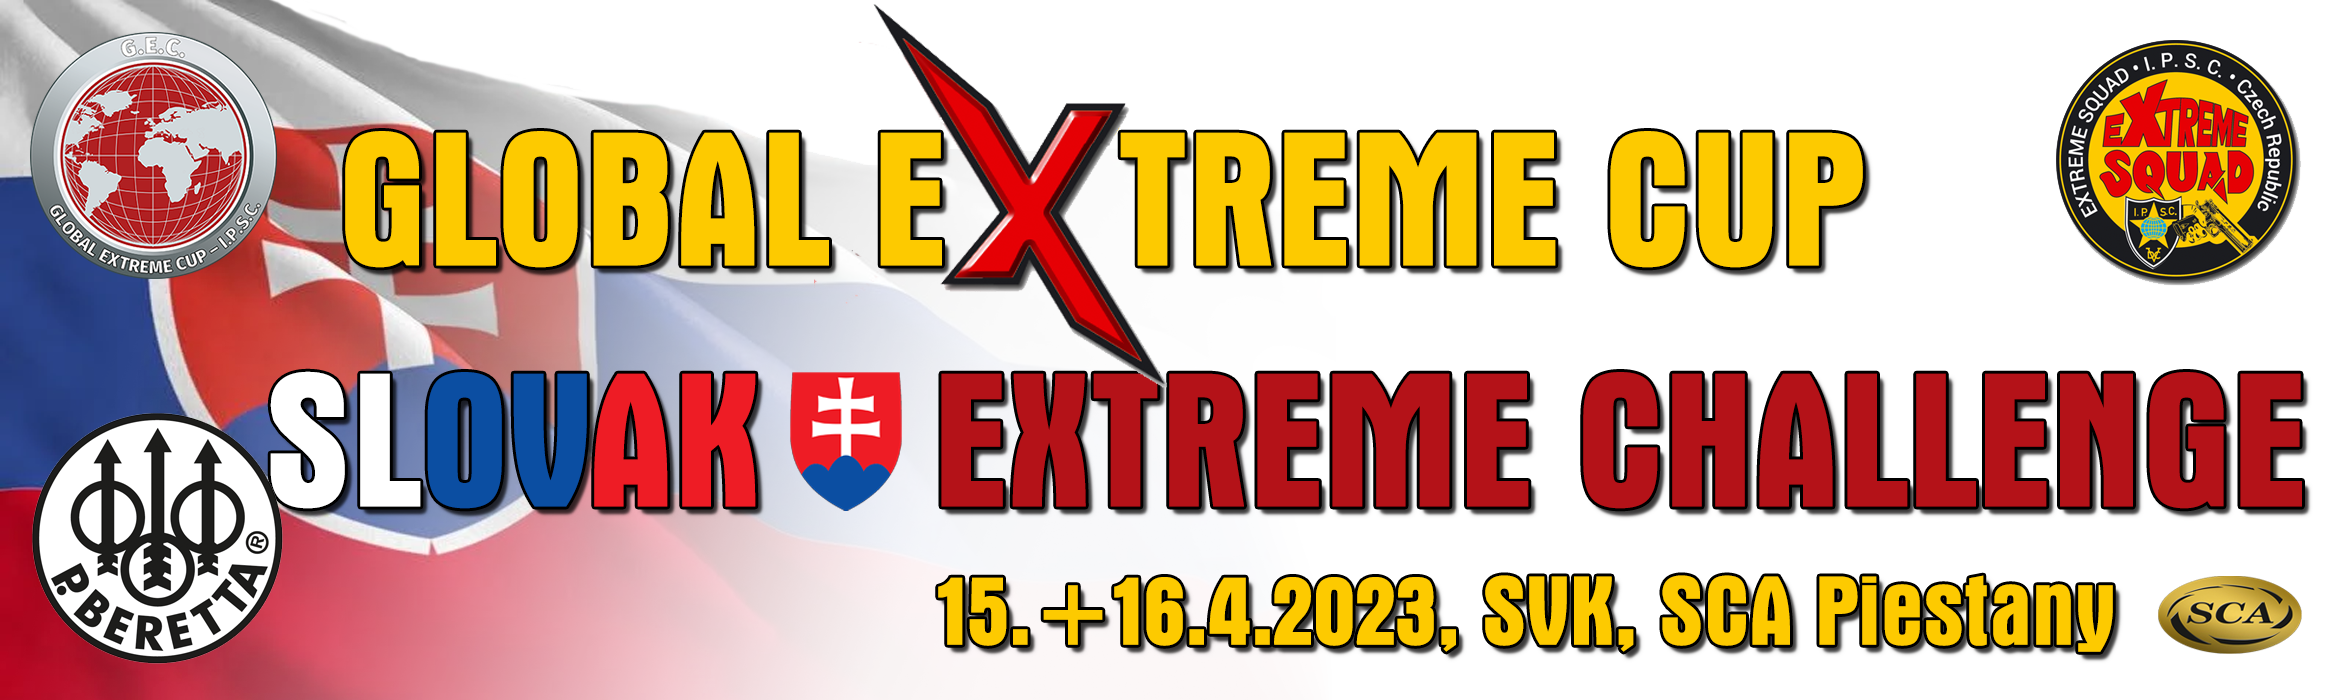 Slovak Extreme Challenge 2022 AUTUMN